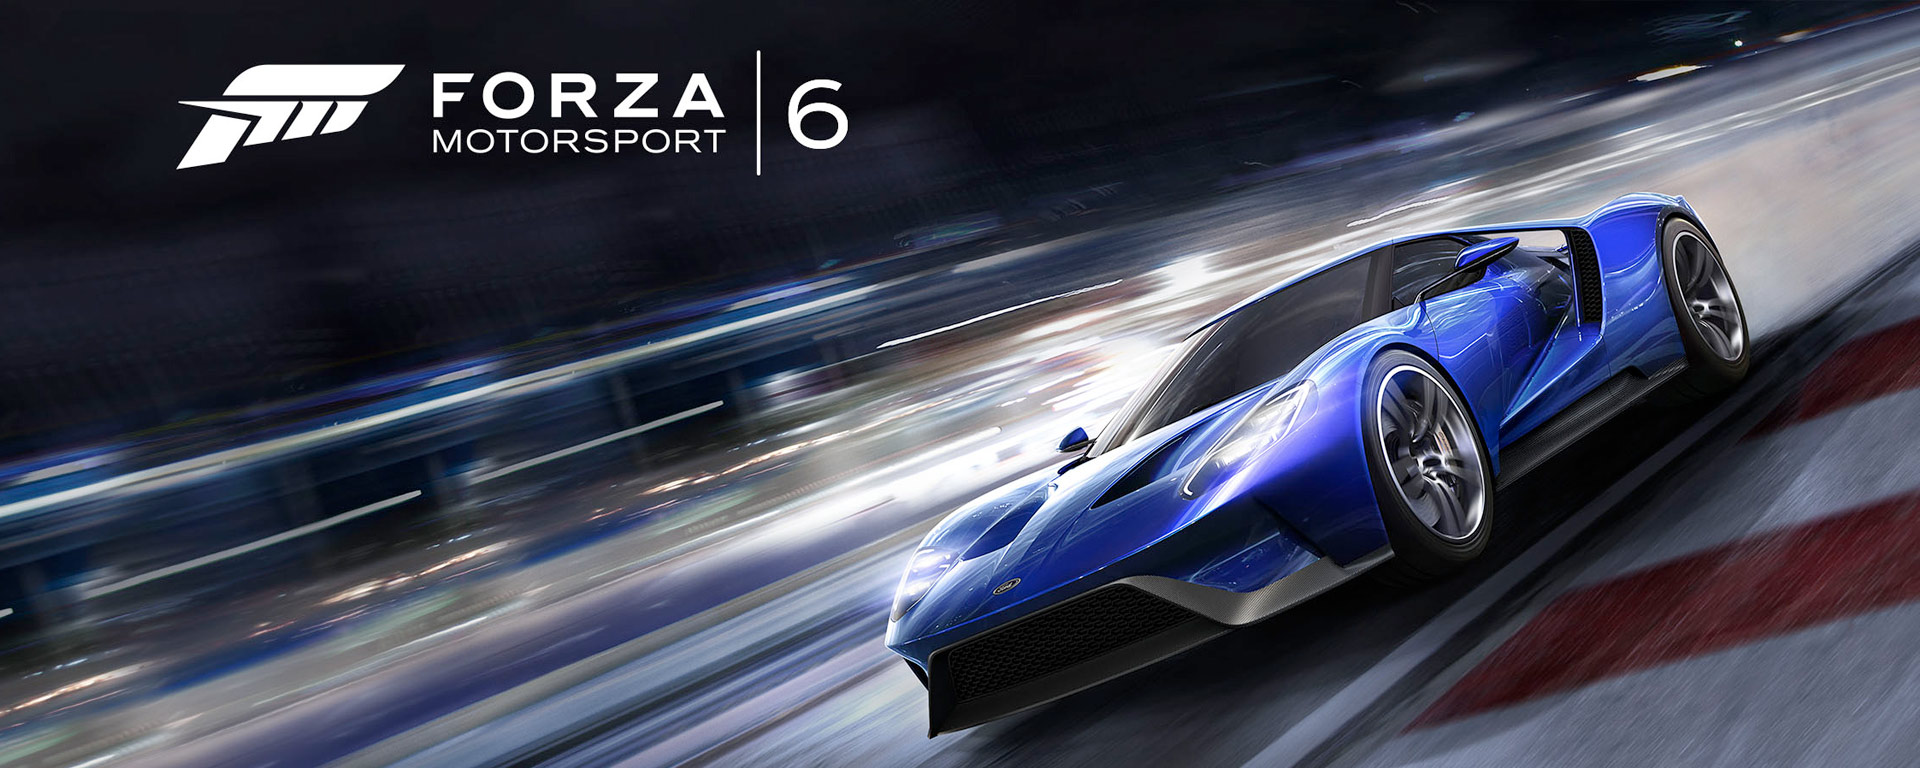 HQ Forza Motorsport 6 Wallpapers | File 287.02Kb